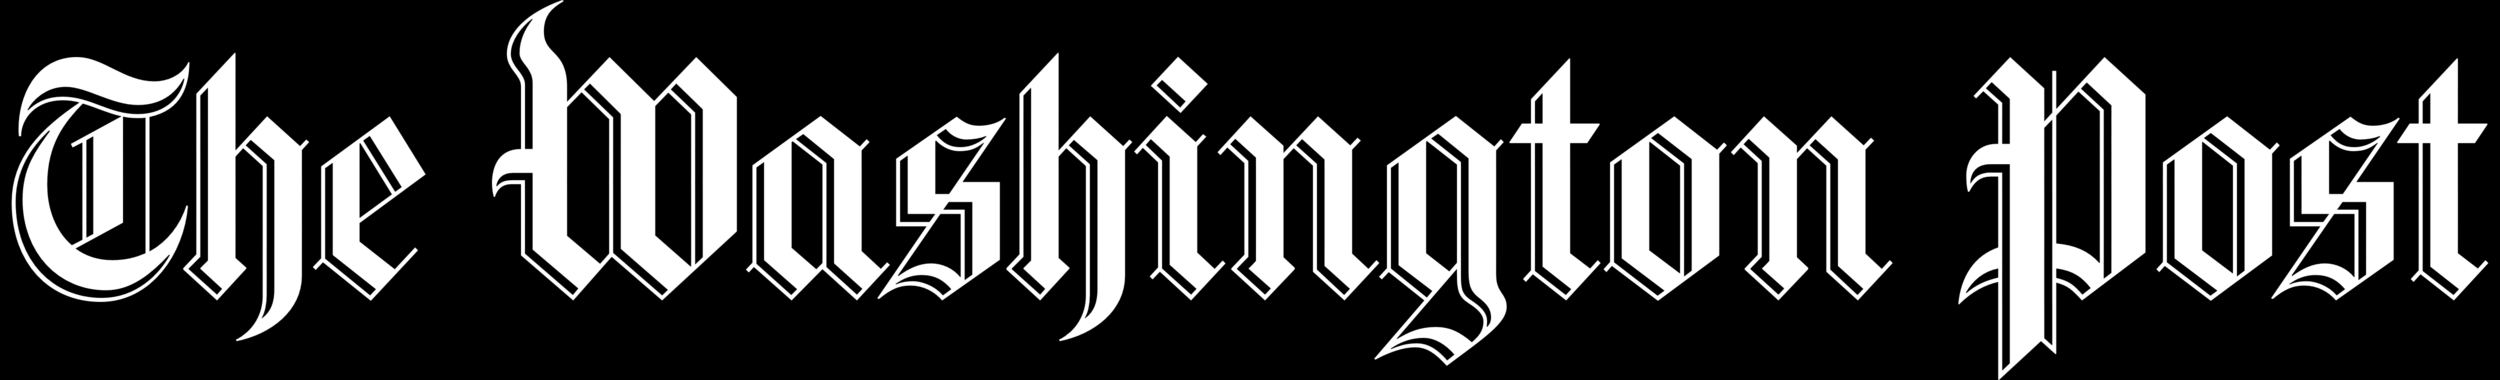 The_Washington_Post_logo_black.png